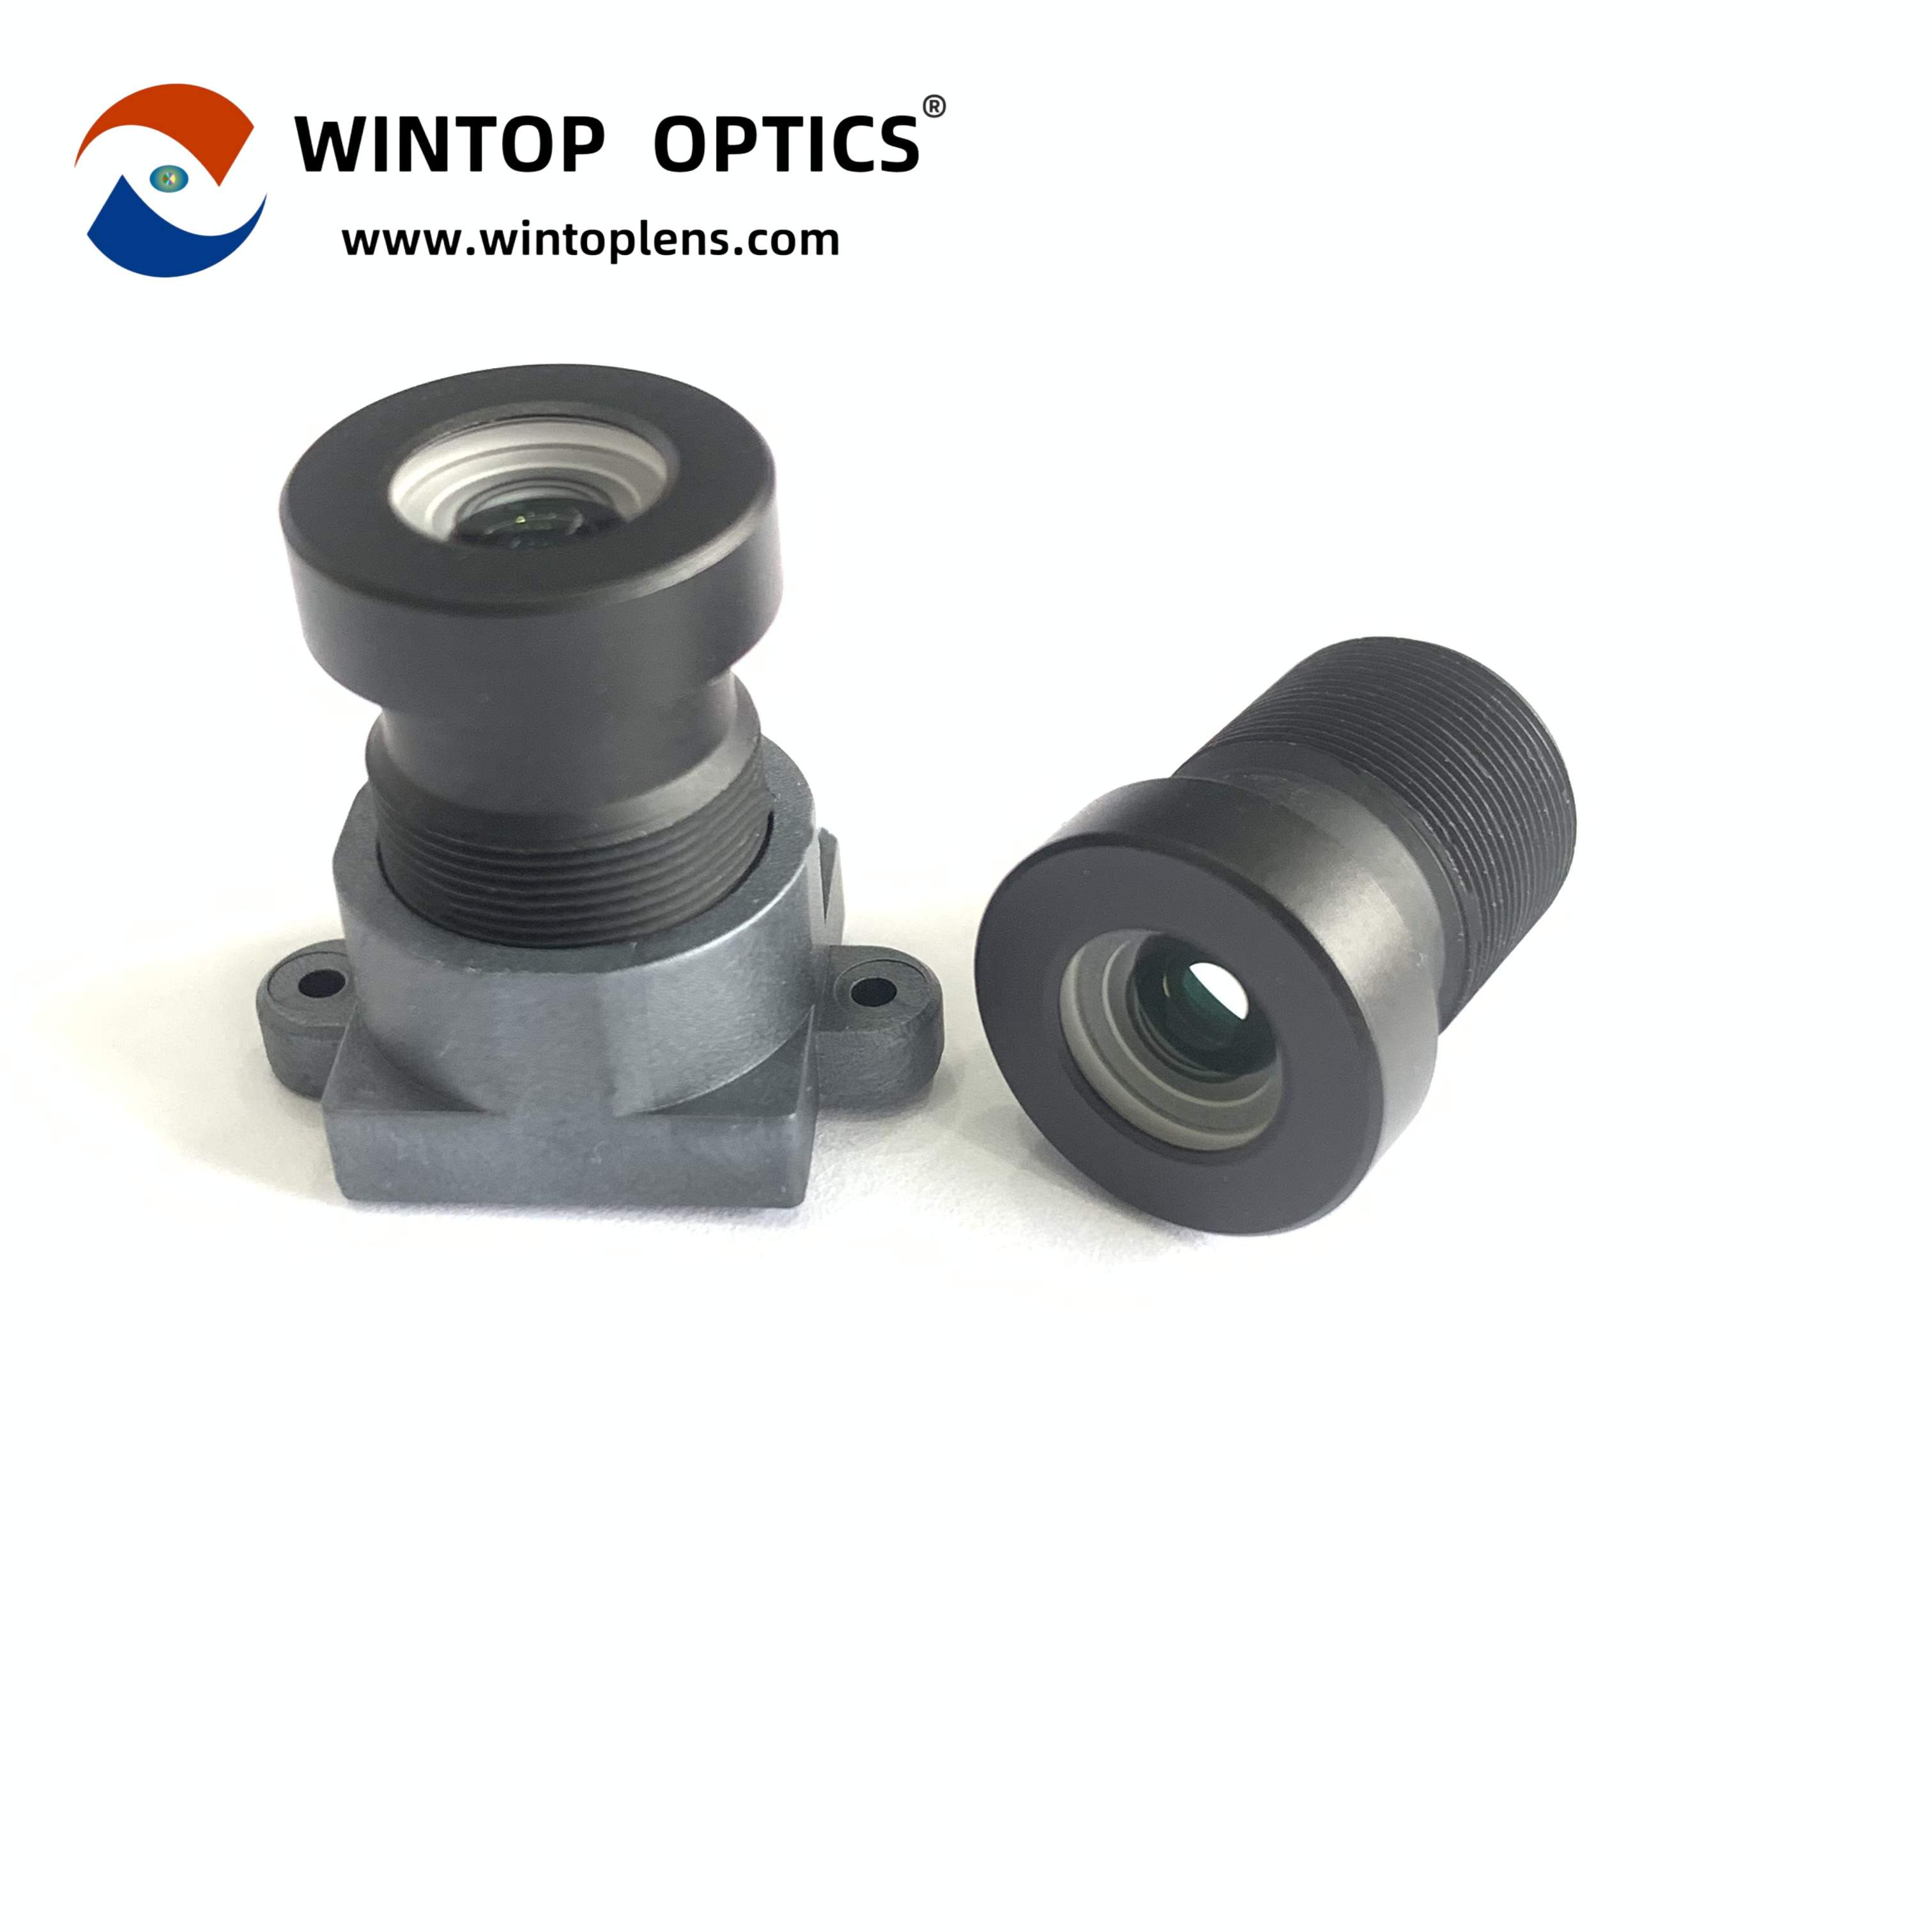 Vehicle Camera Lenses ADAS Intelligent Assisted Driving Recorder Lens YT-7591-D1 - WINTOP OPTICS